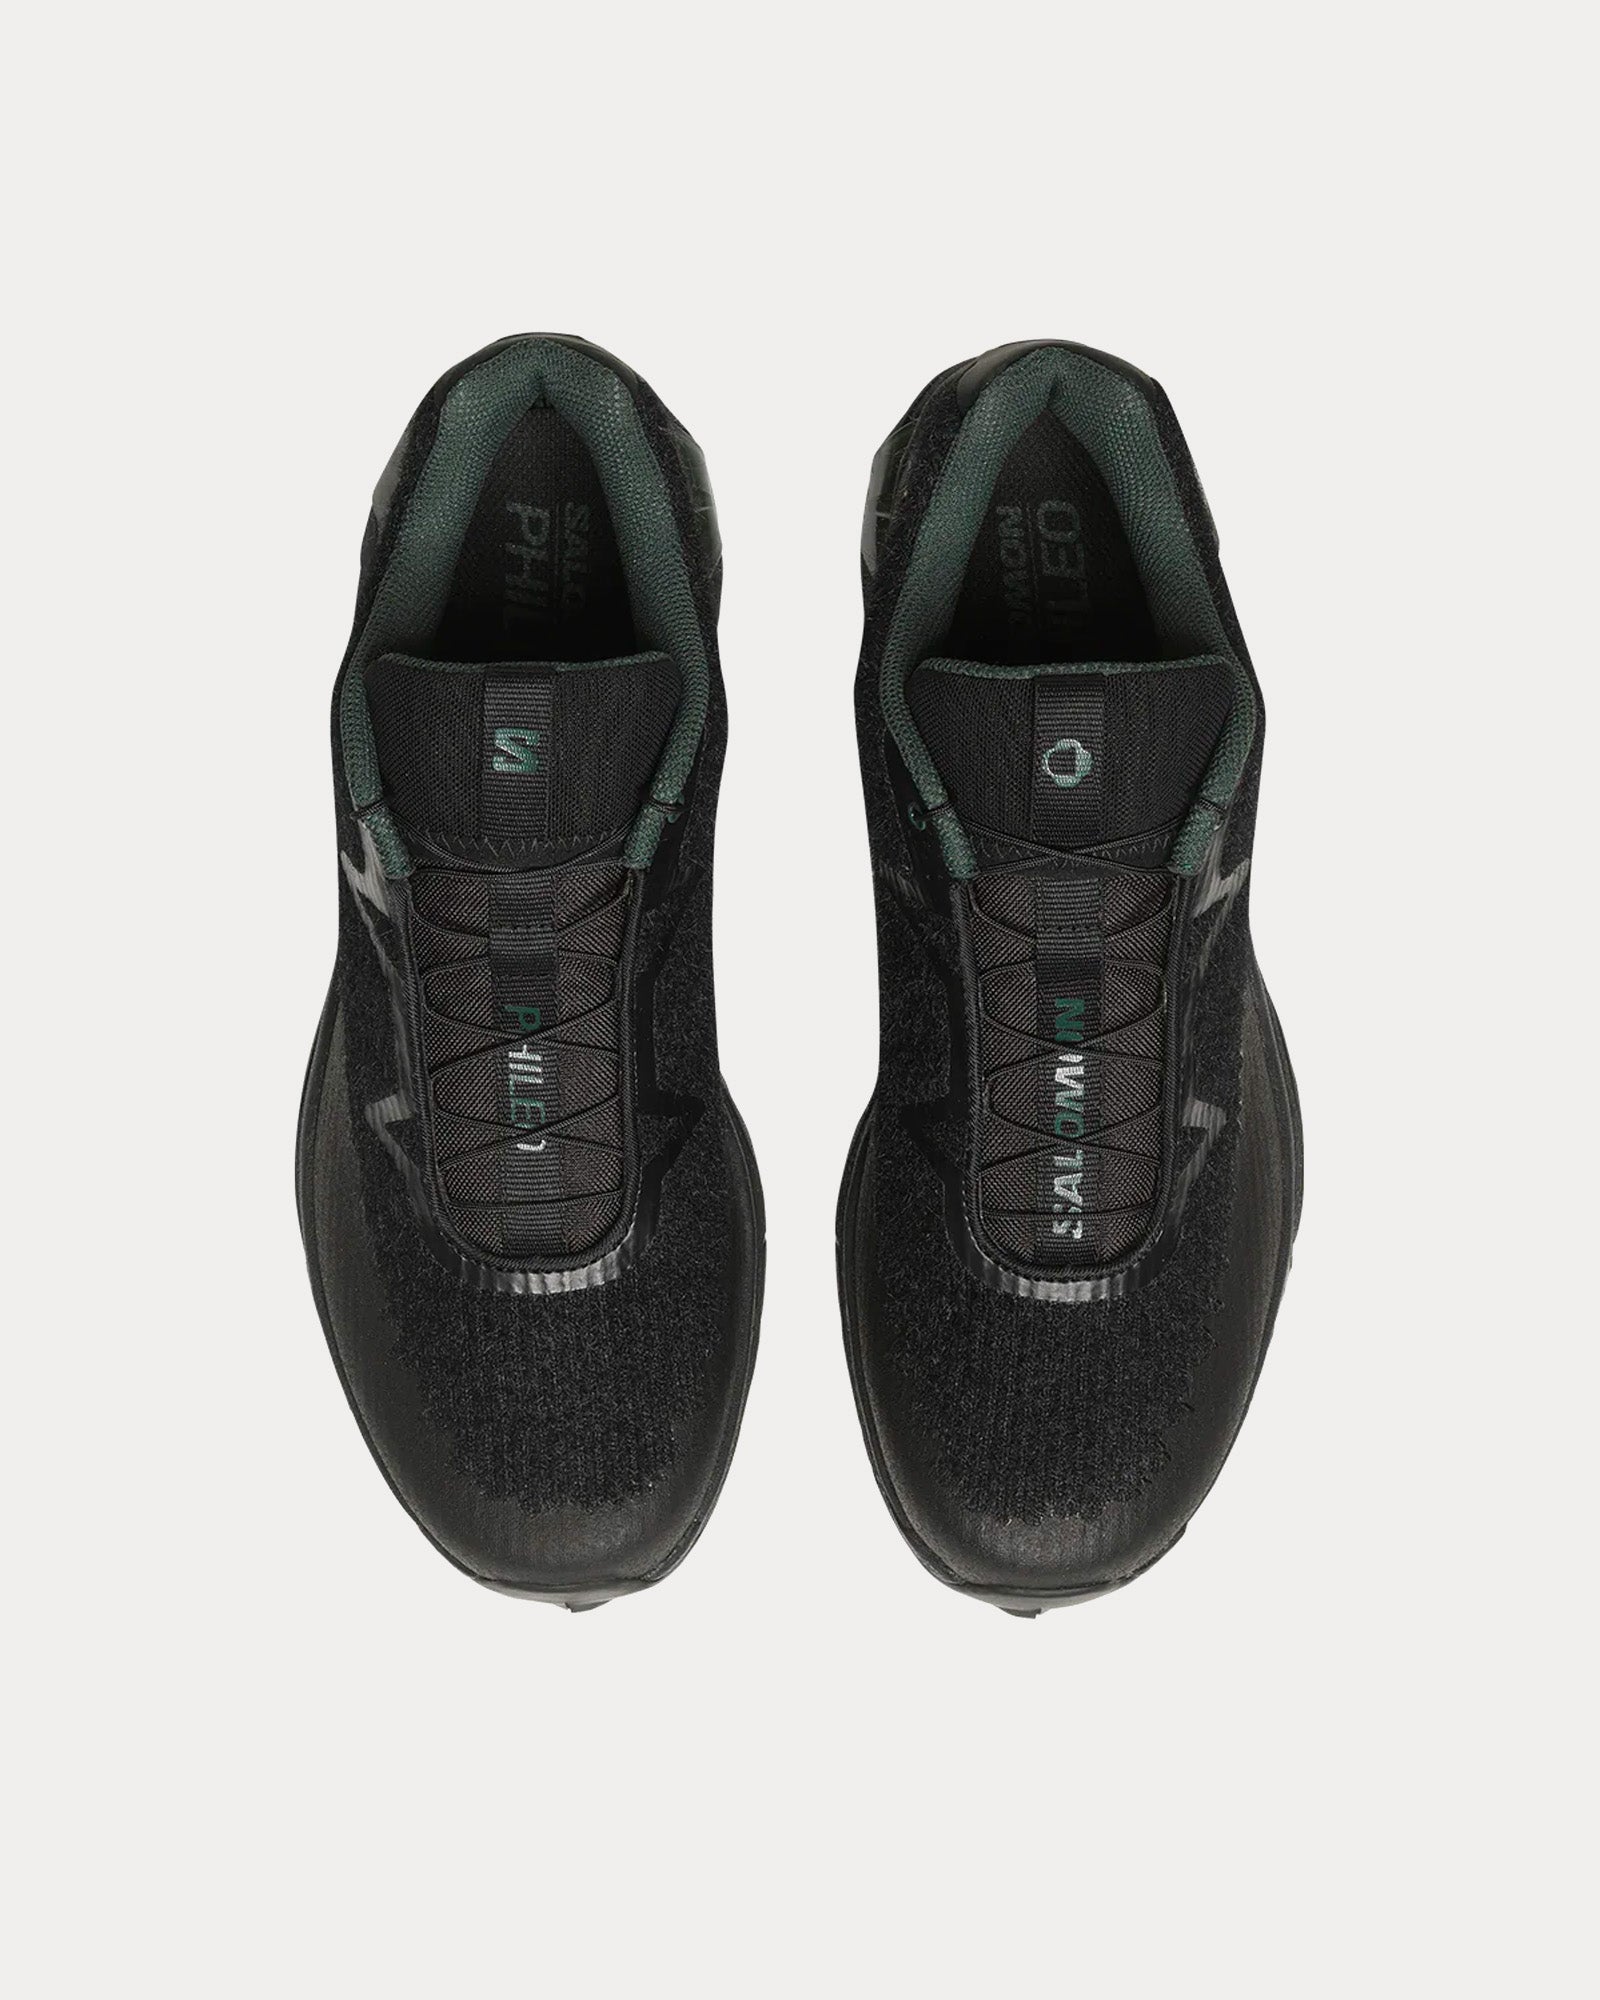 Salomon x Phileo - XT-SP1 Black / Darkest Spruce Low Top Sneakers